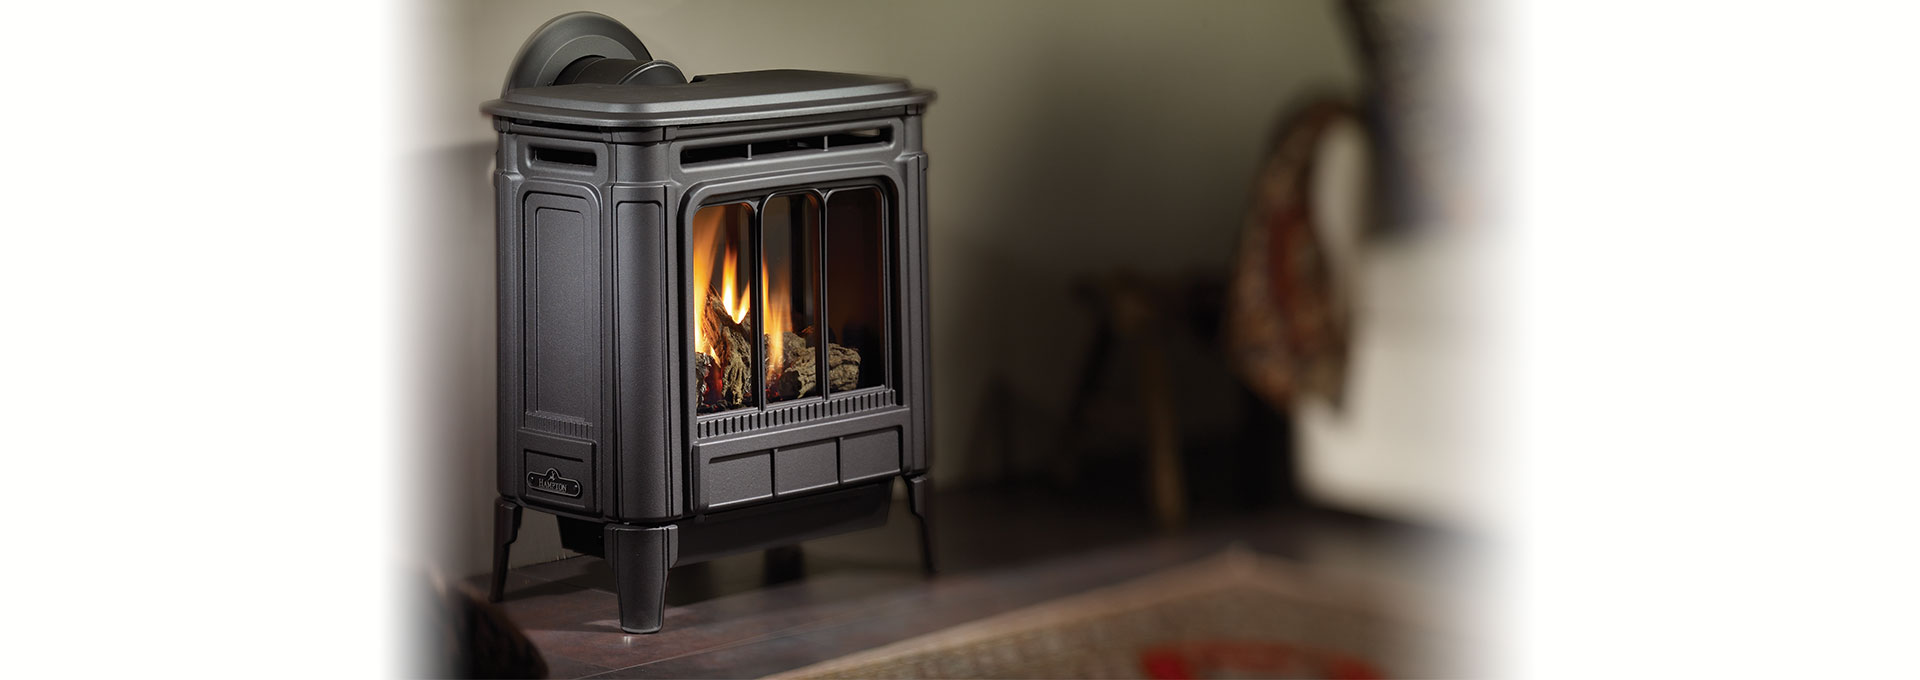 H15 Small Gas Stove - Ambassador Fireplaces